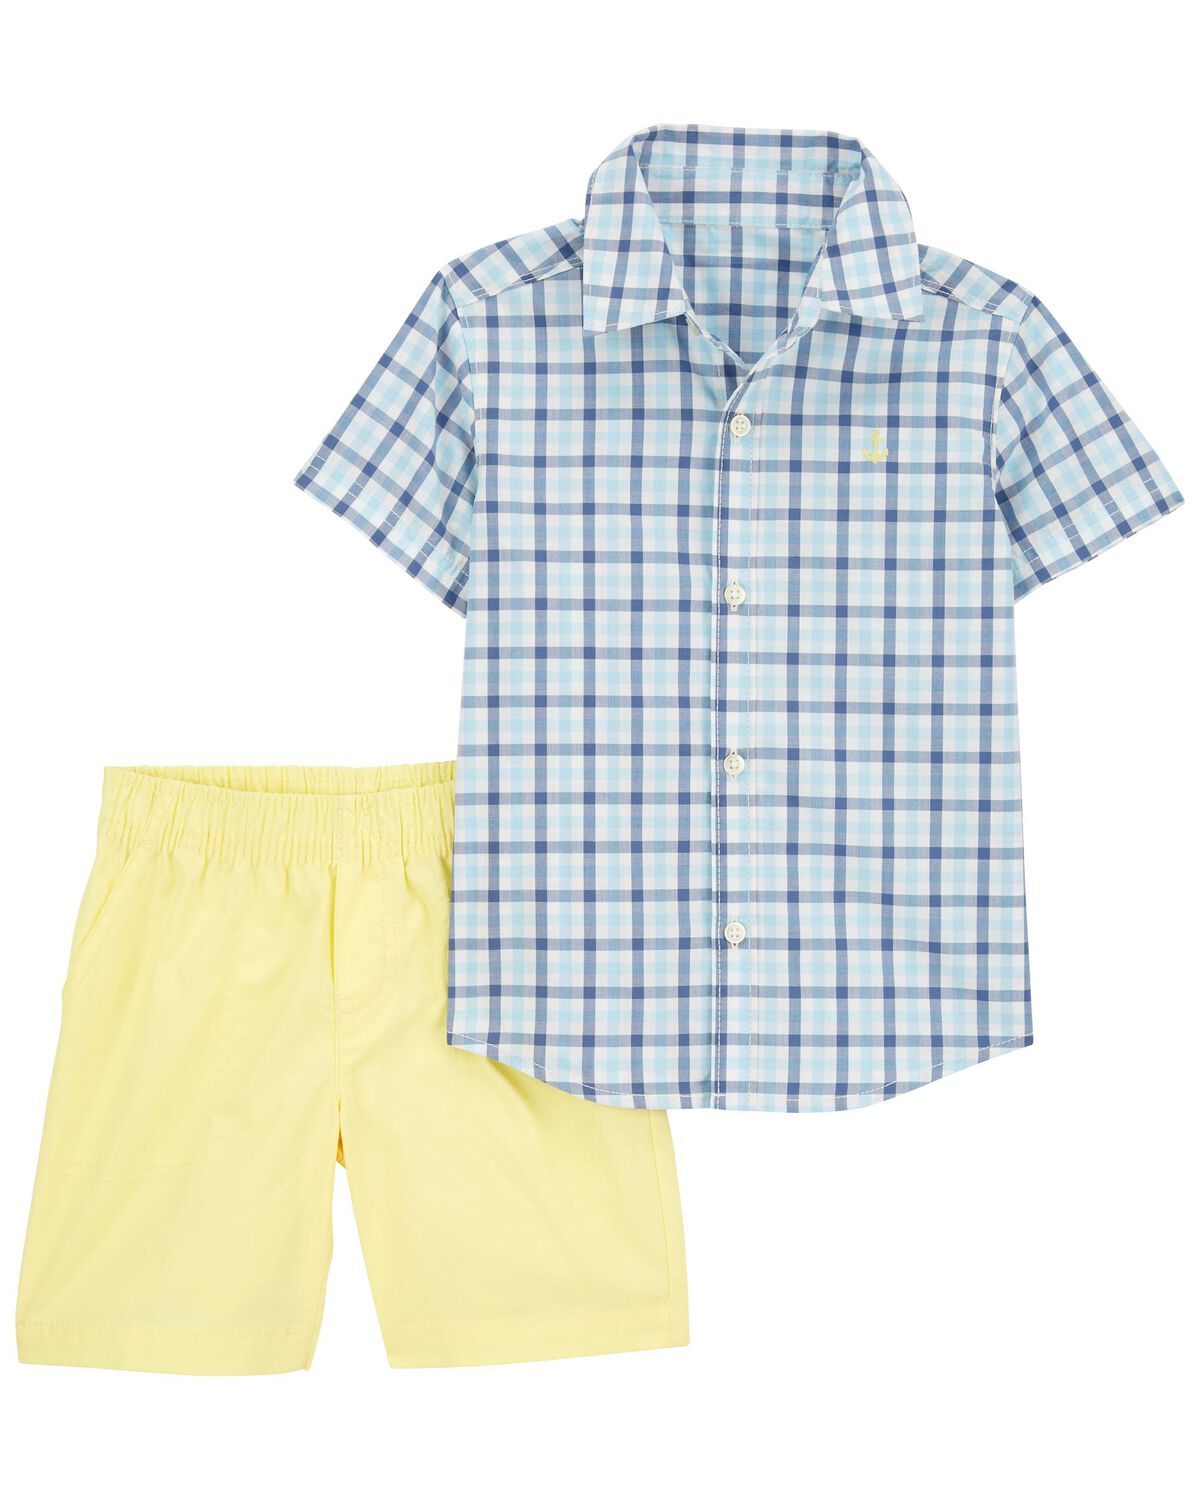 Blue/Yellow Toddler 2-Piece Plaid Button-Down Shirt & Short Set | oshkosh.com | OshKosh B'gosh